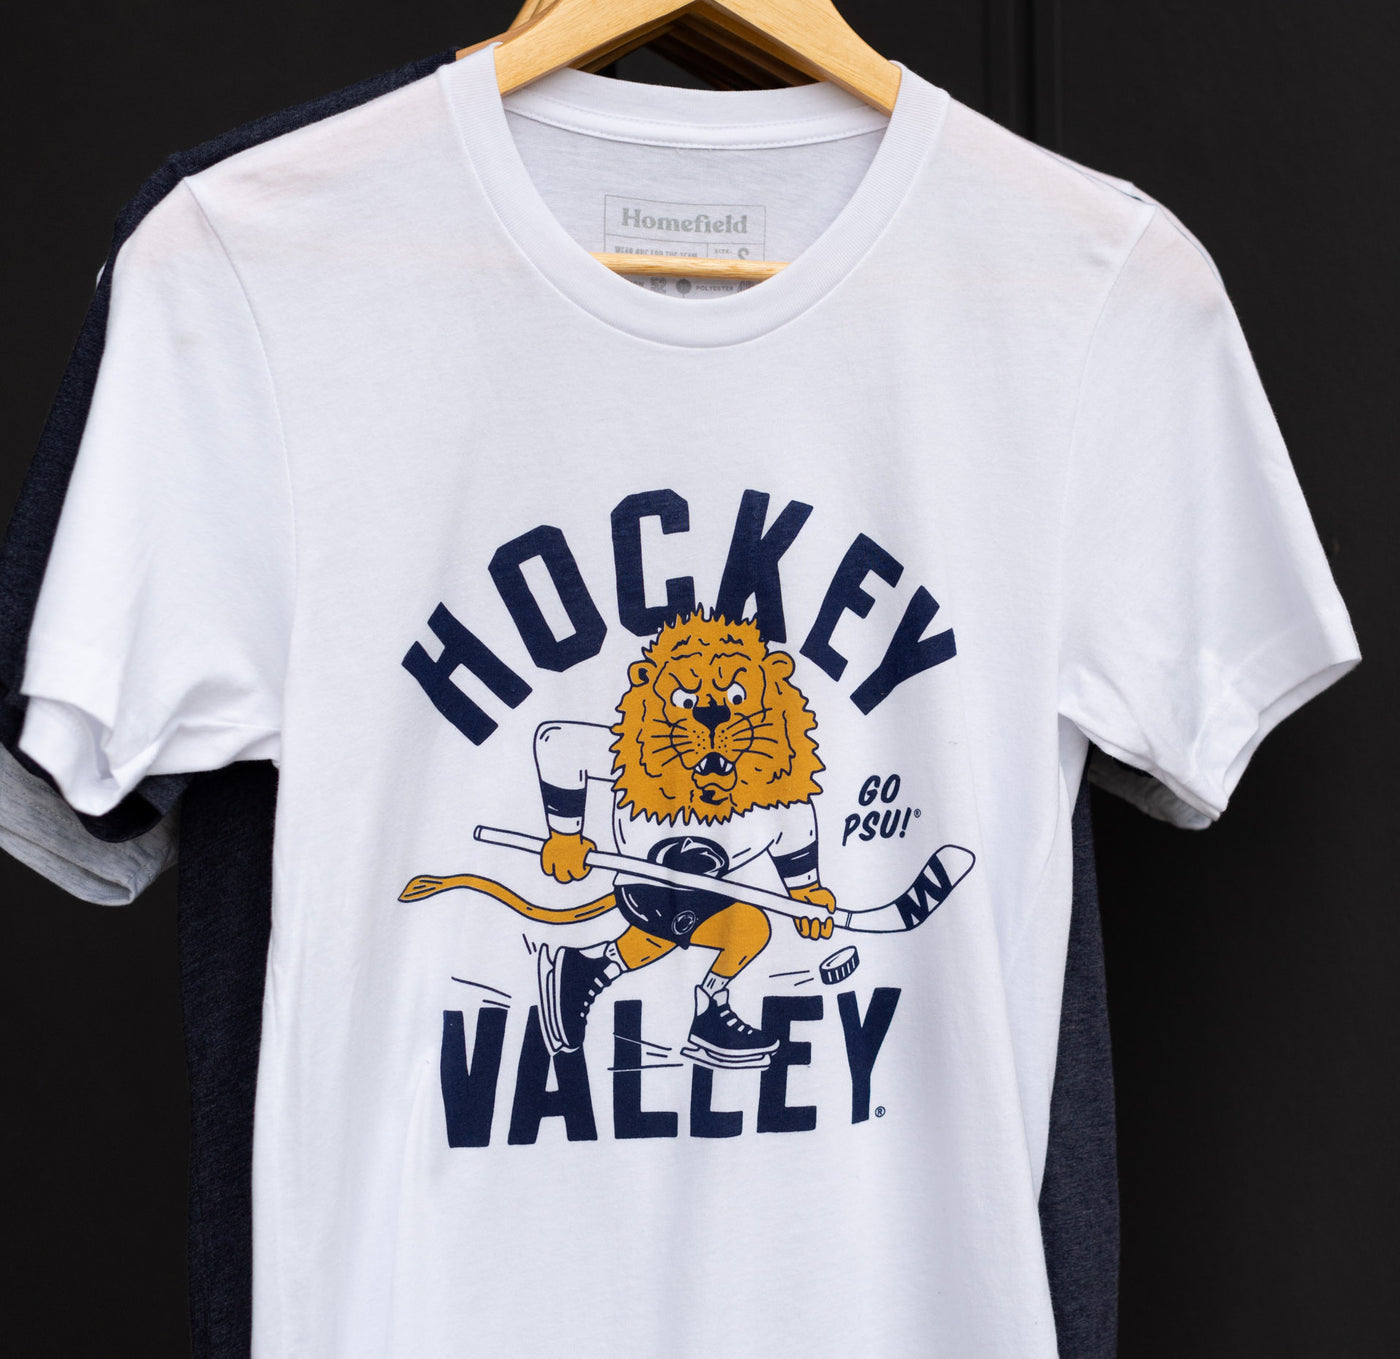 Vintage Hockey Valley Tee